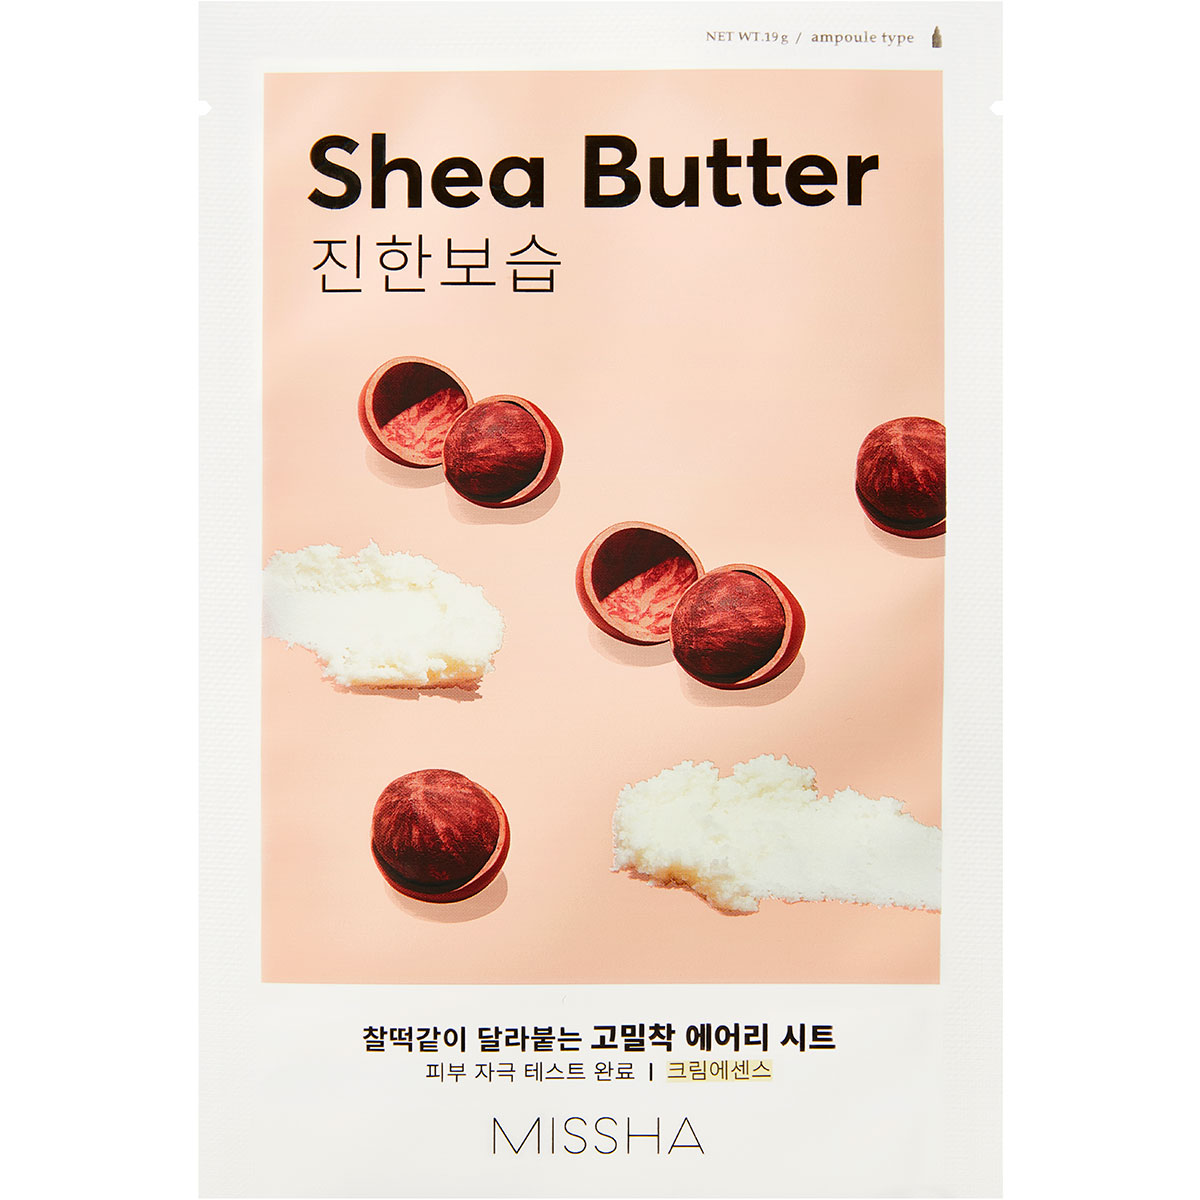 Airy Fit Sheet Mask (Shea Butter) 19 g MISSHA K-Beauty